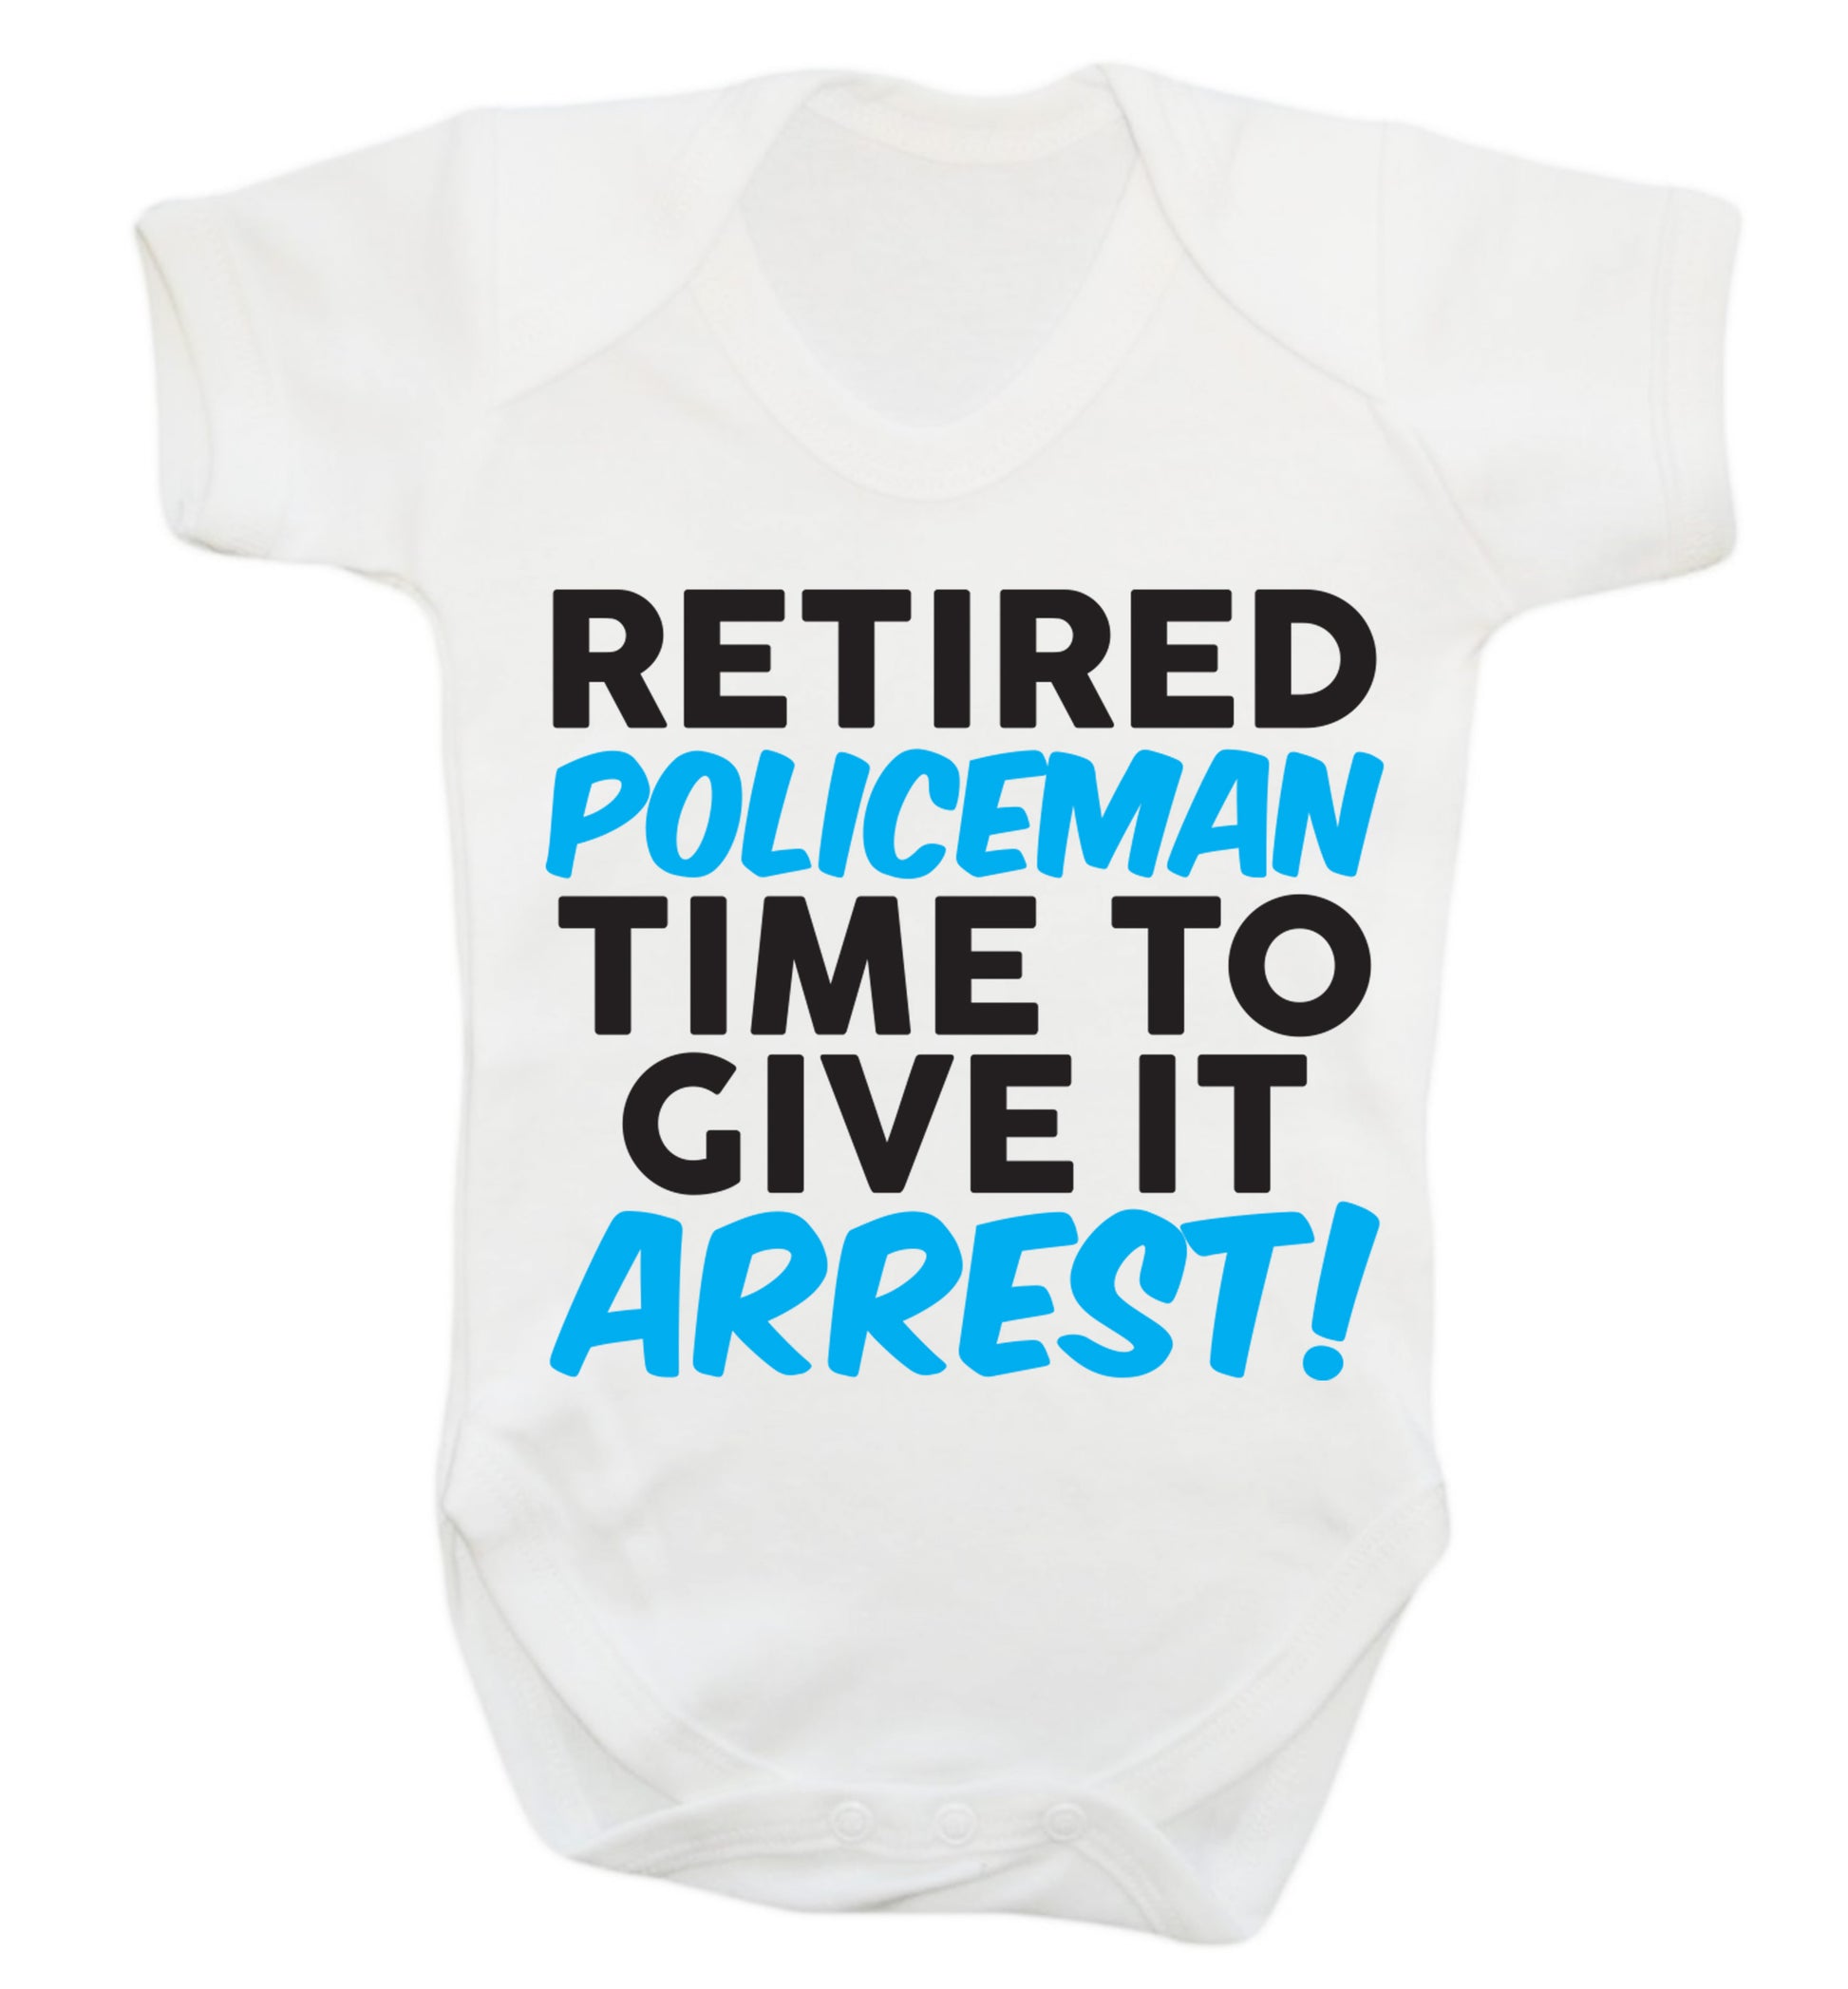 Retired policeman give it arresst! Baby Vest white 18-24 months